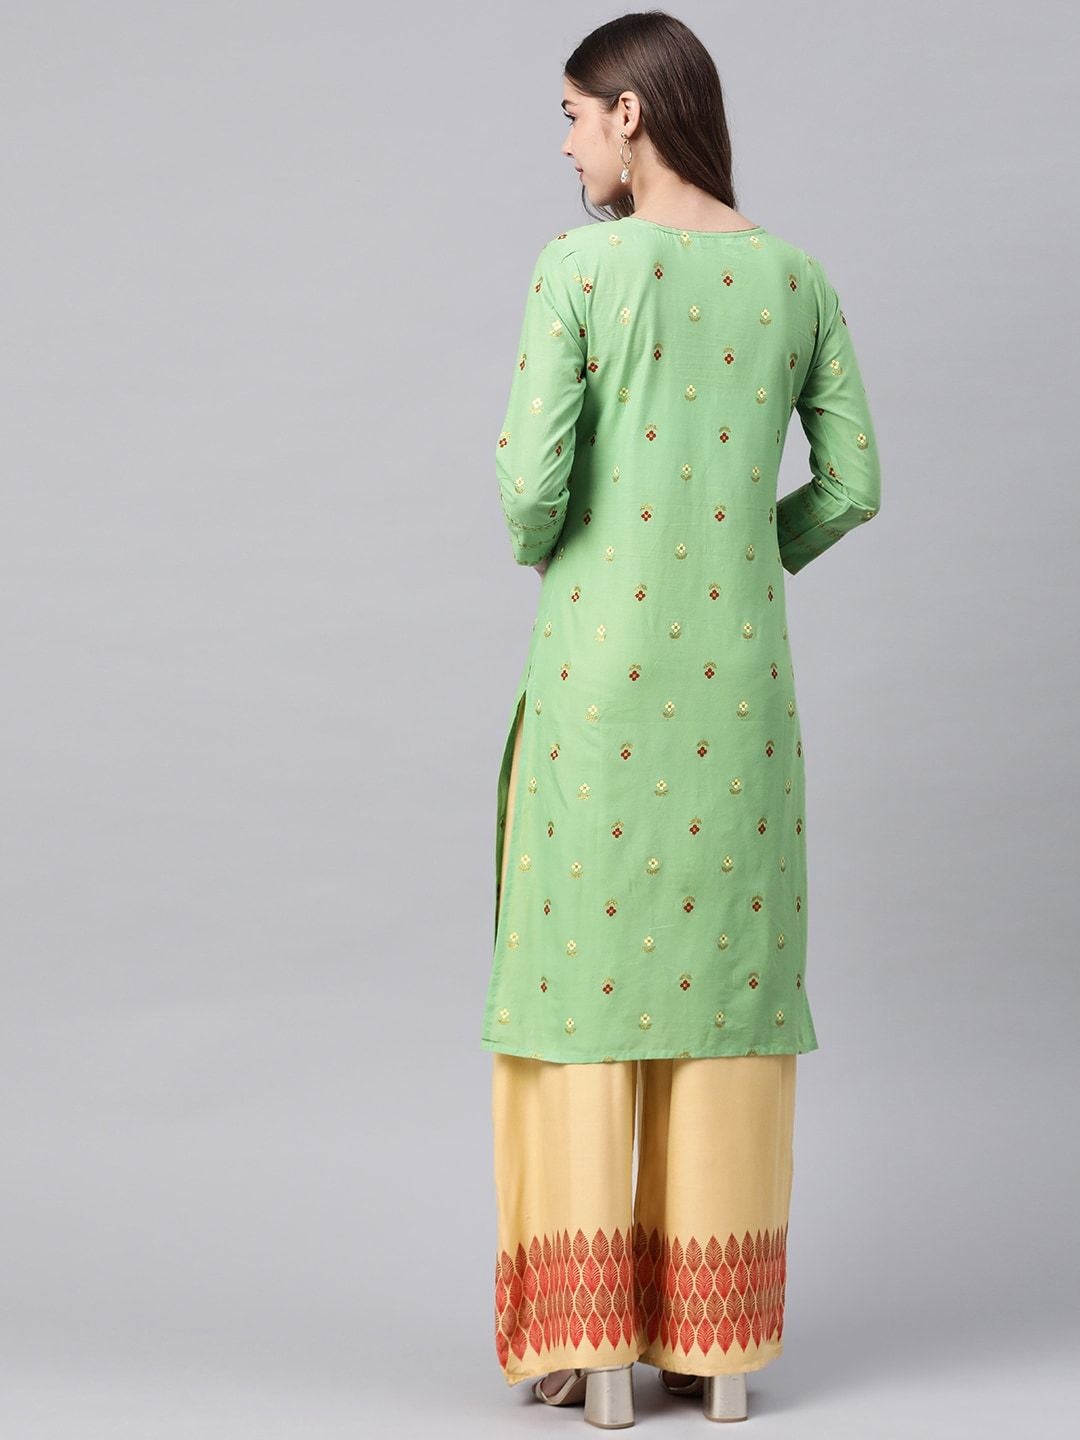 Women's Green & Beige Printed Pure Cotton Kurta with Palazzos - Meeranshi